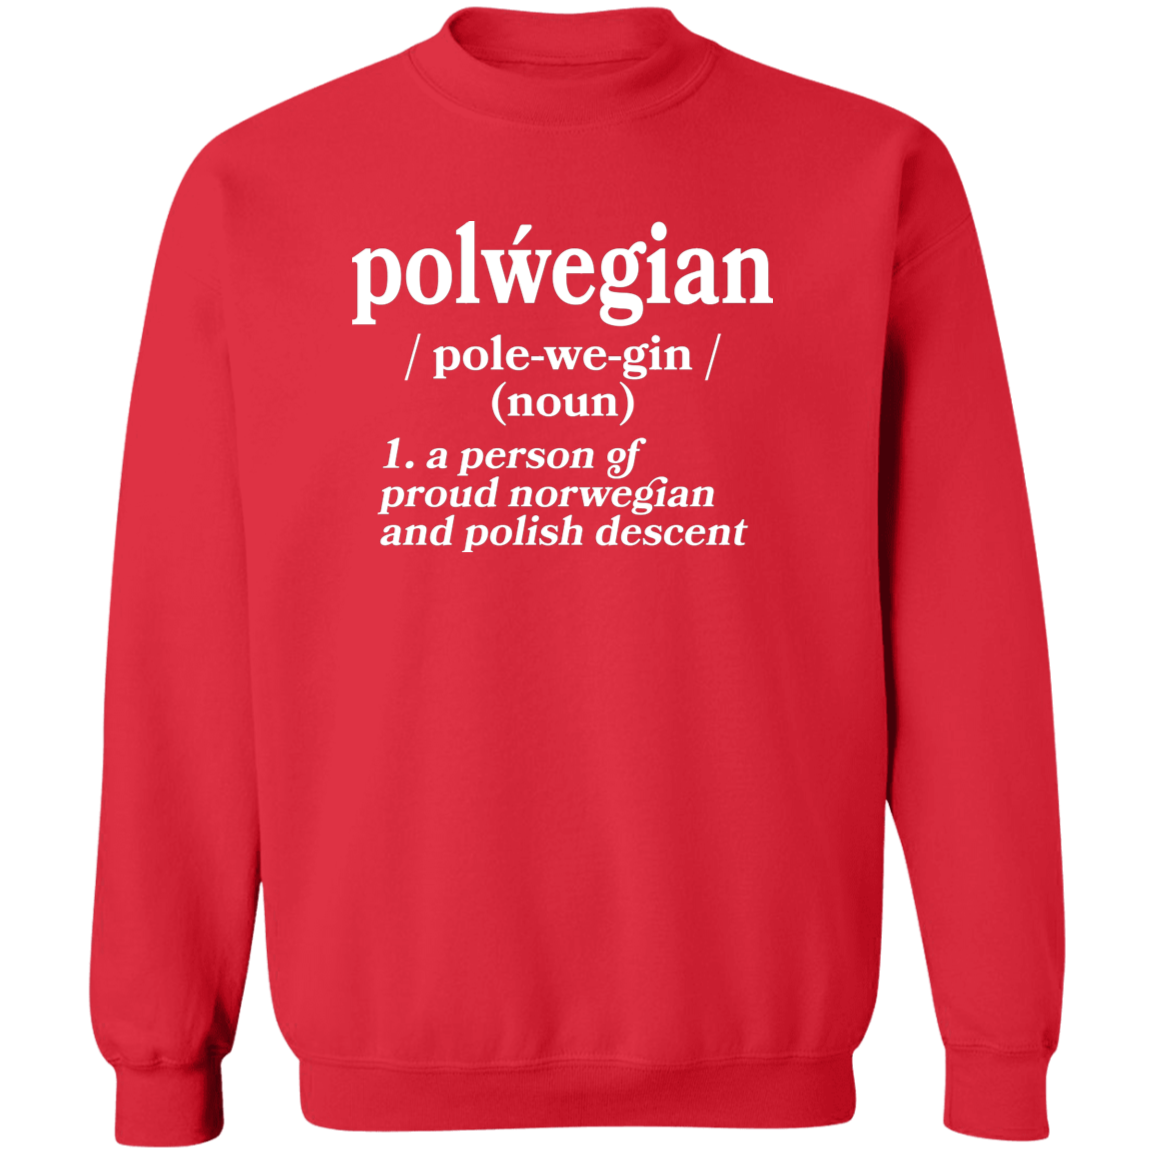 Polwegian - Norwegian and Polish Descent Apparel CustomCat G180 Crewneck Pullover Sweatshirt Red S